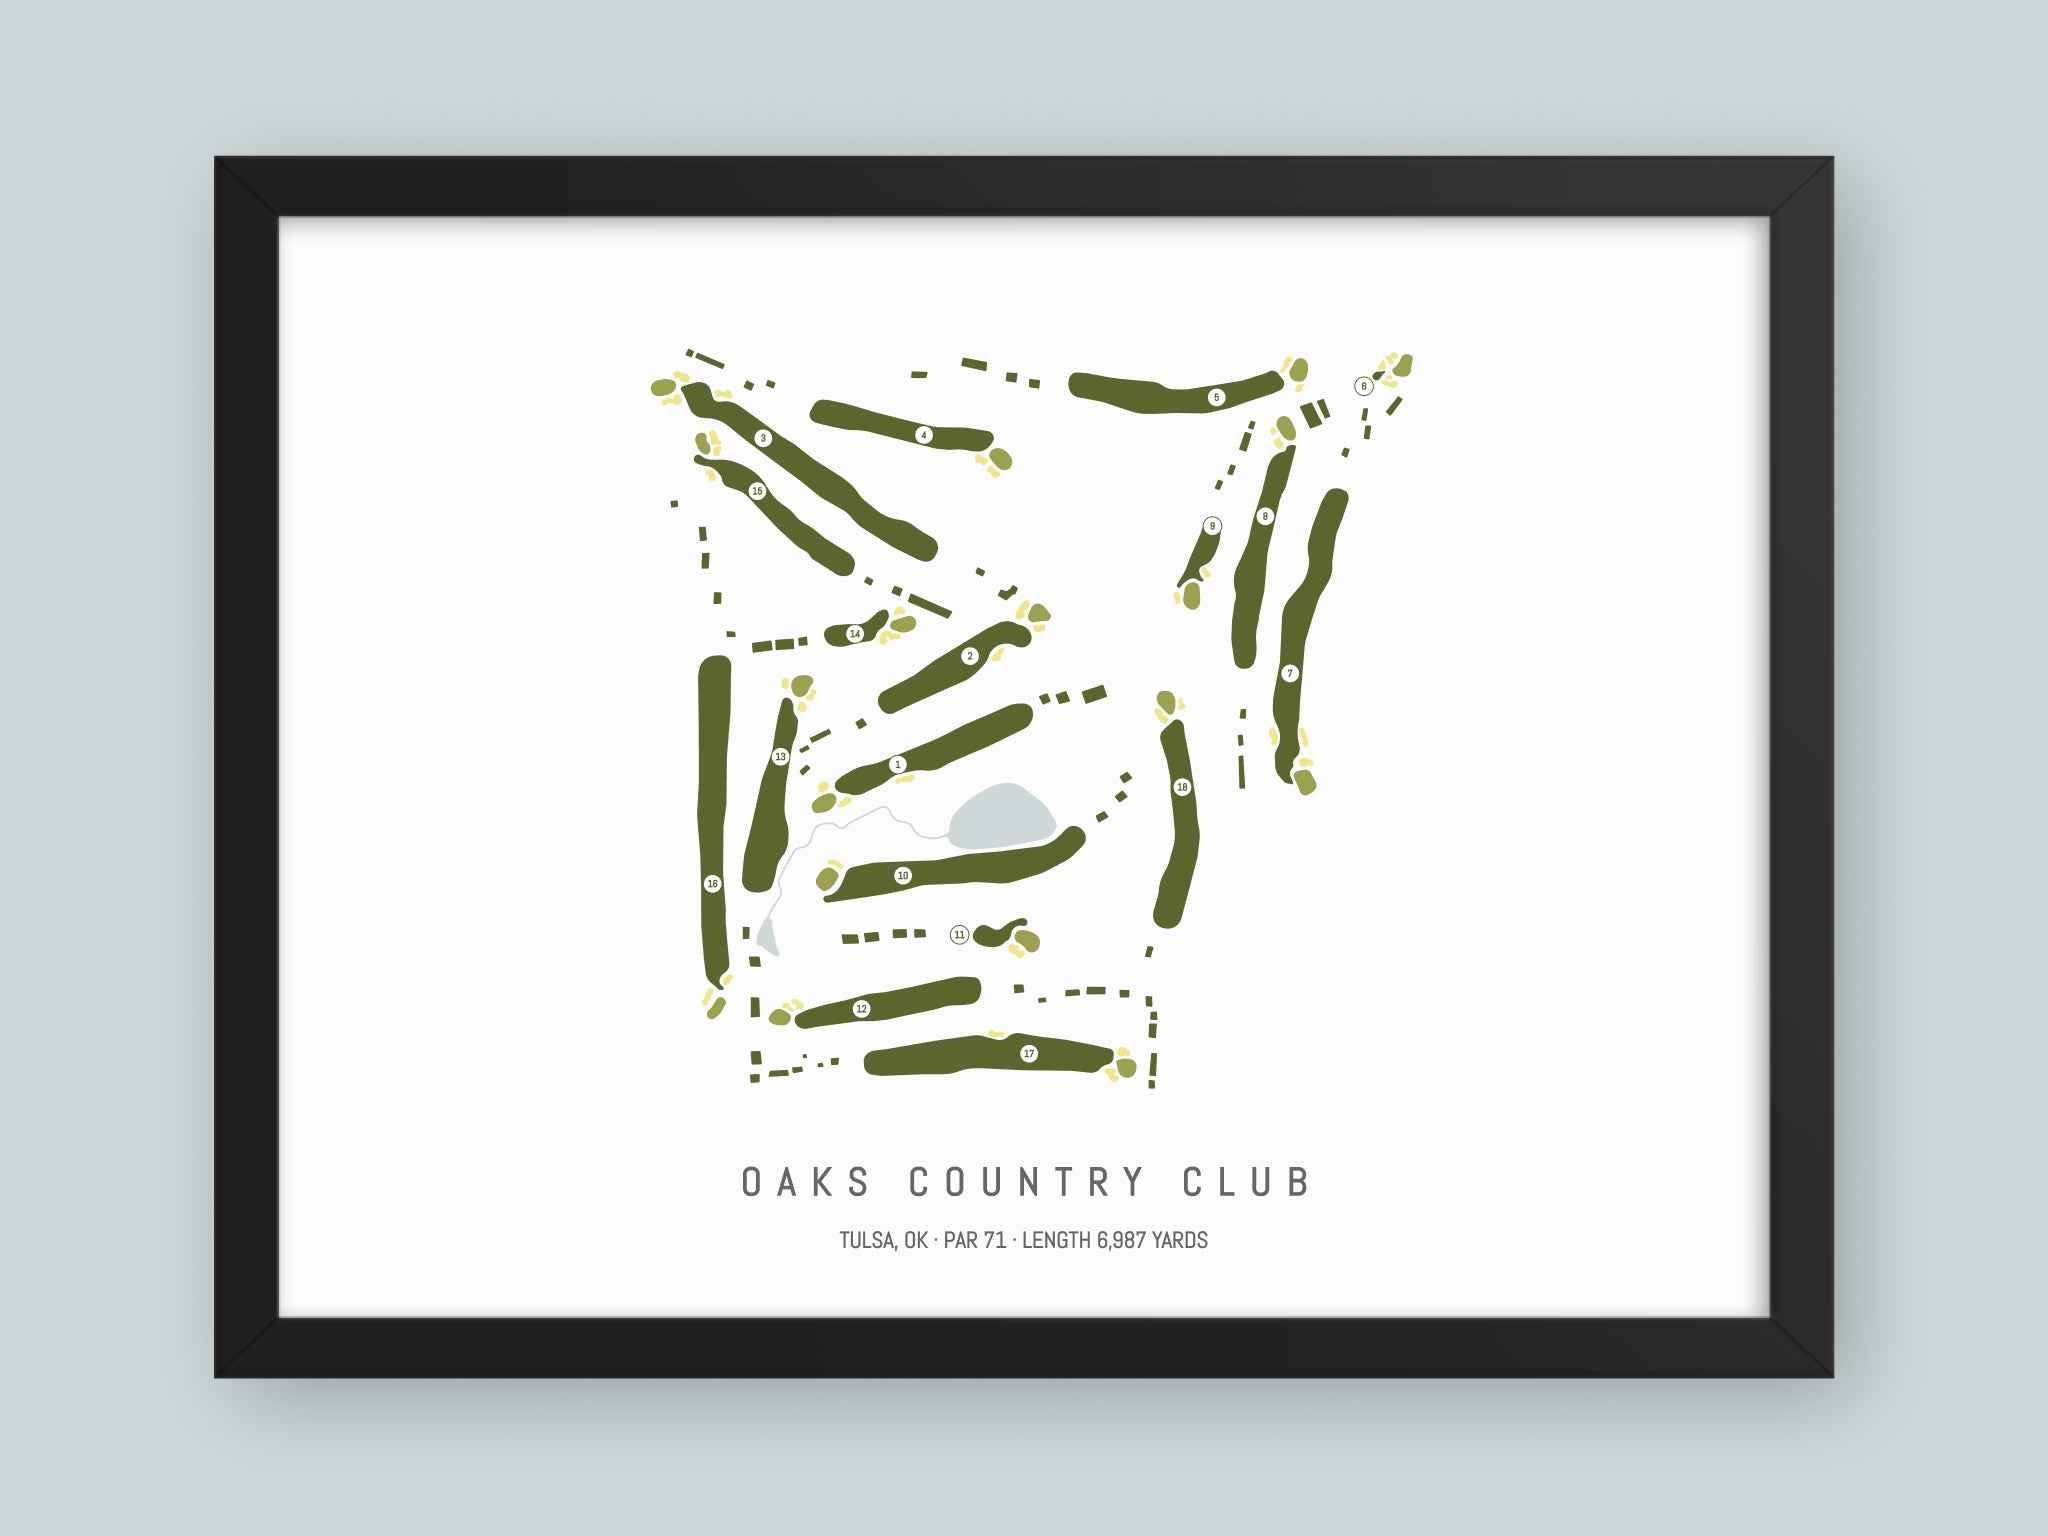 Oaks-Country-Club-OK--Black-Frame-24x18-With-Hole-Numbers